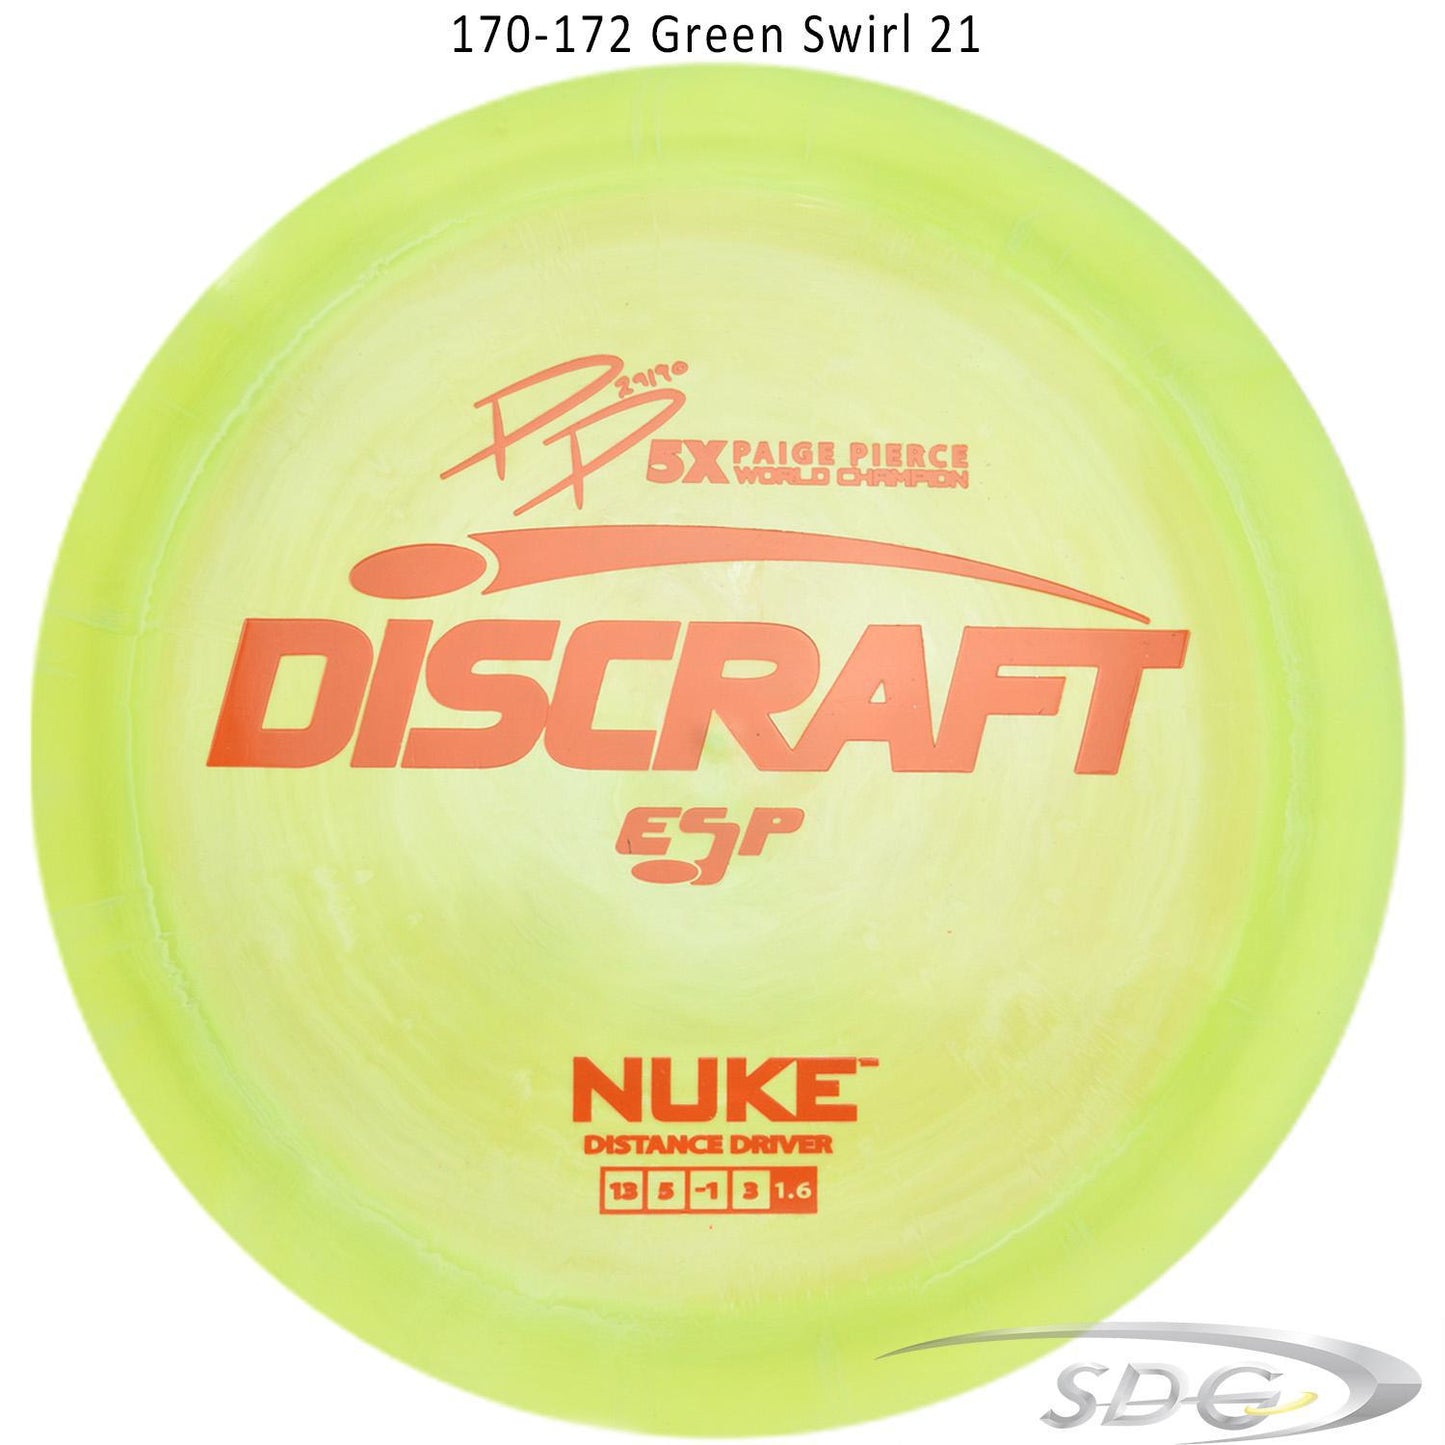 discraft-esp-nuke-paige-pierce-signature-disc-golf-distance-driver-172-170-weights 170-172 Green Swirl 21 